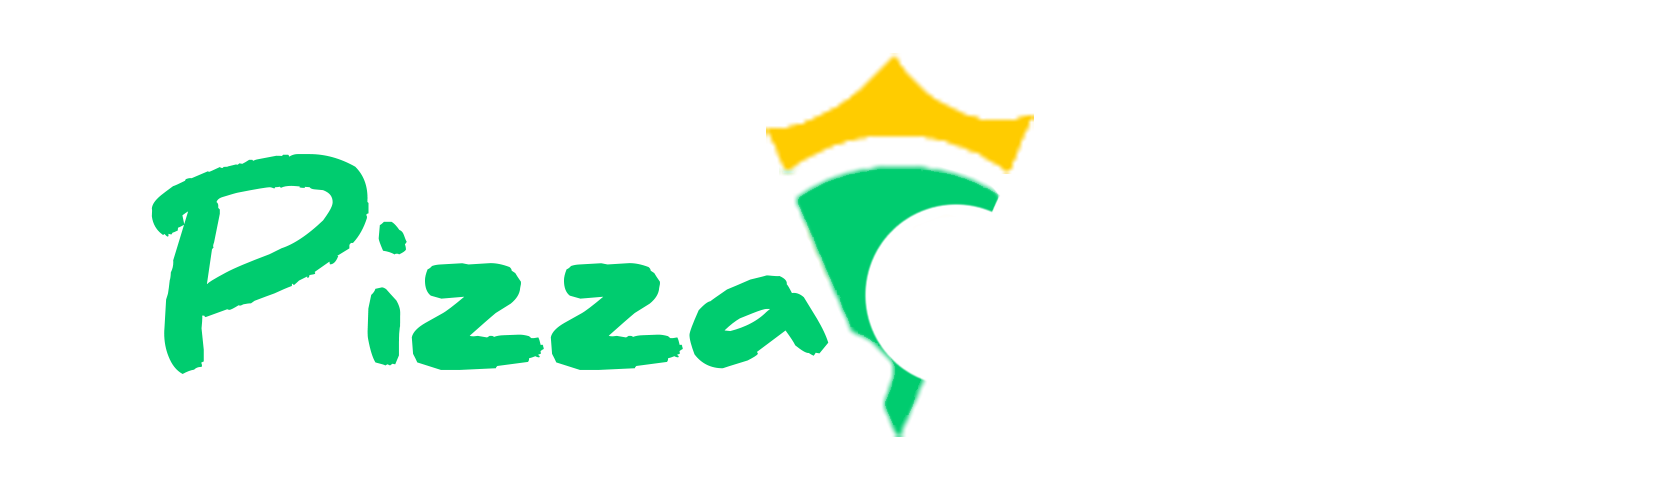 logo-new-white